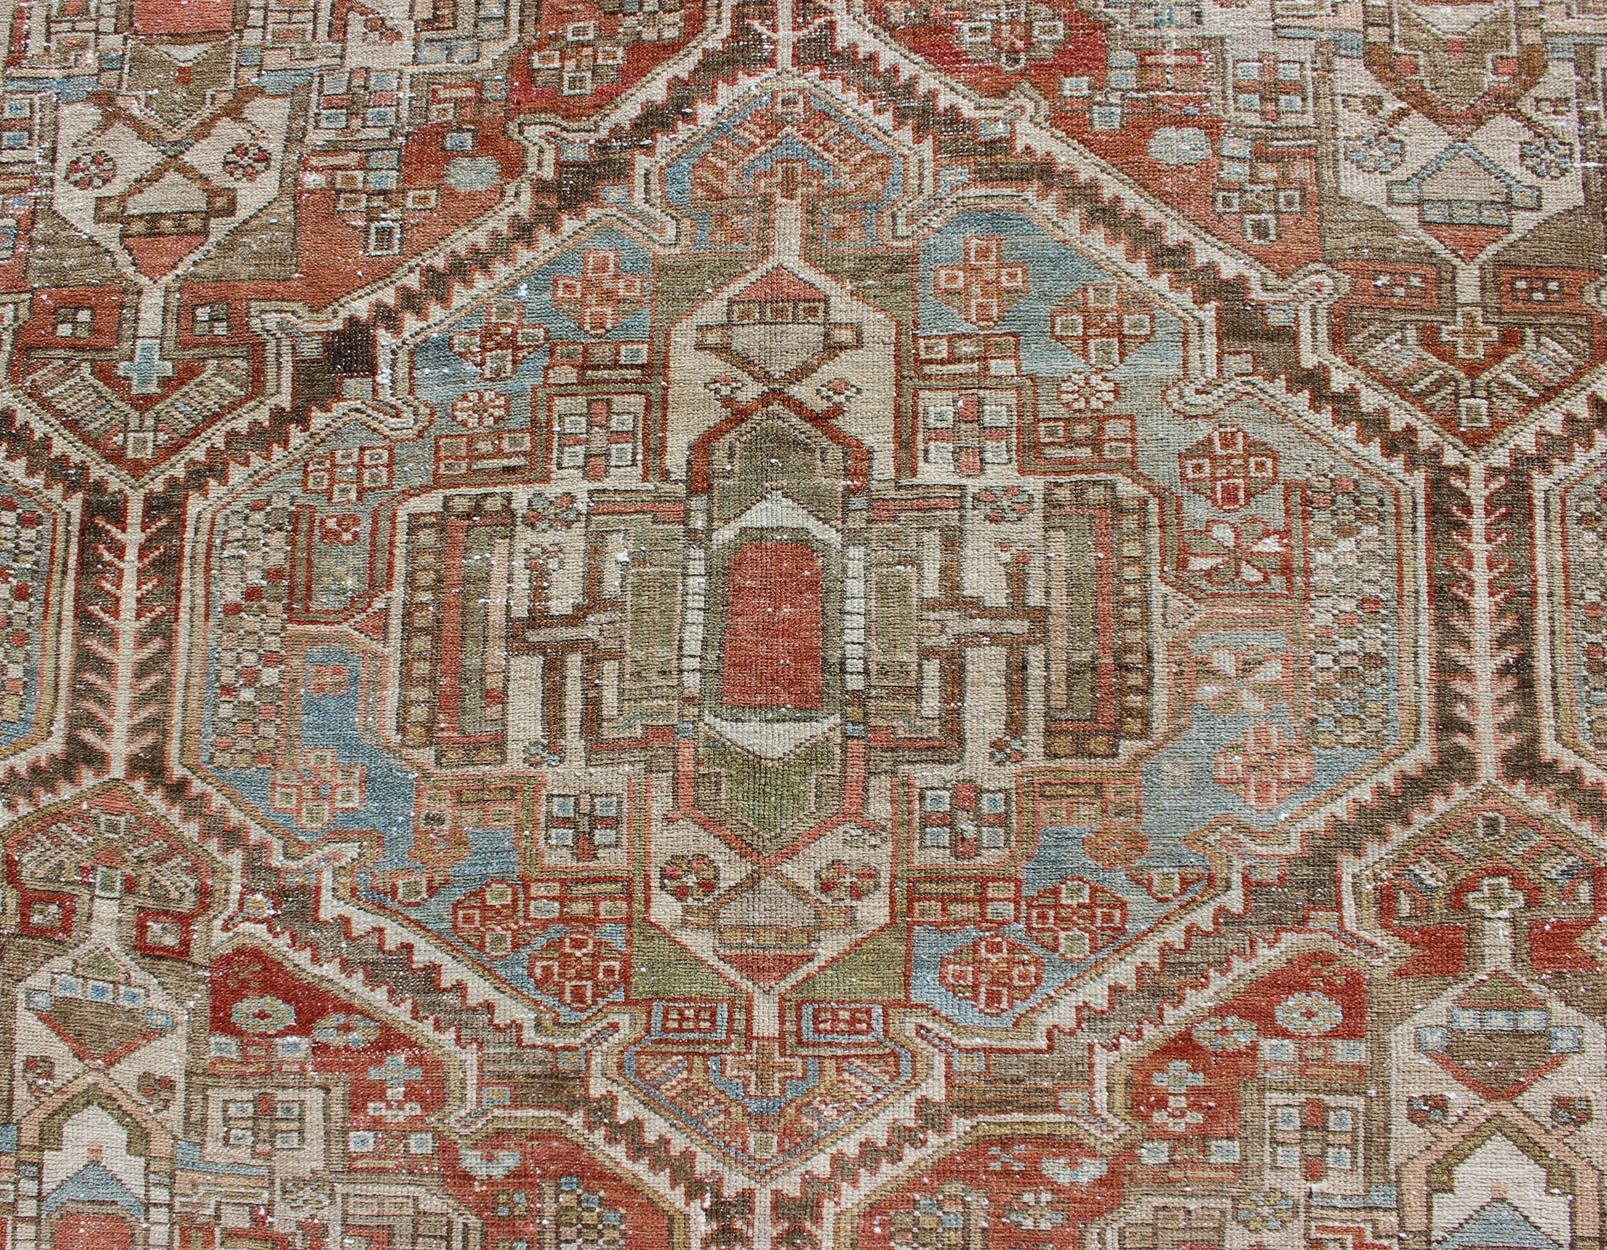 Large Antique Persian Over Sized Diamond Design Bakhtiari Rug in Multi Colors For Sale 2